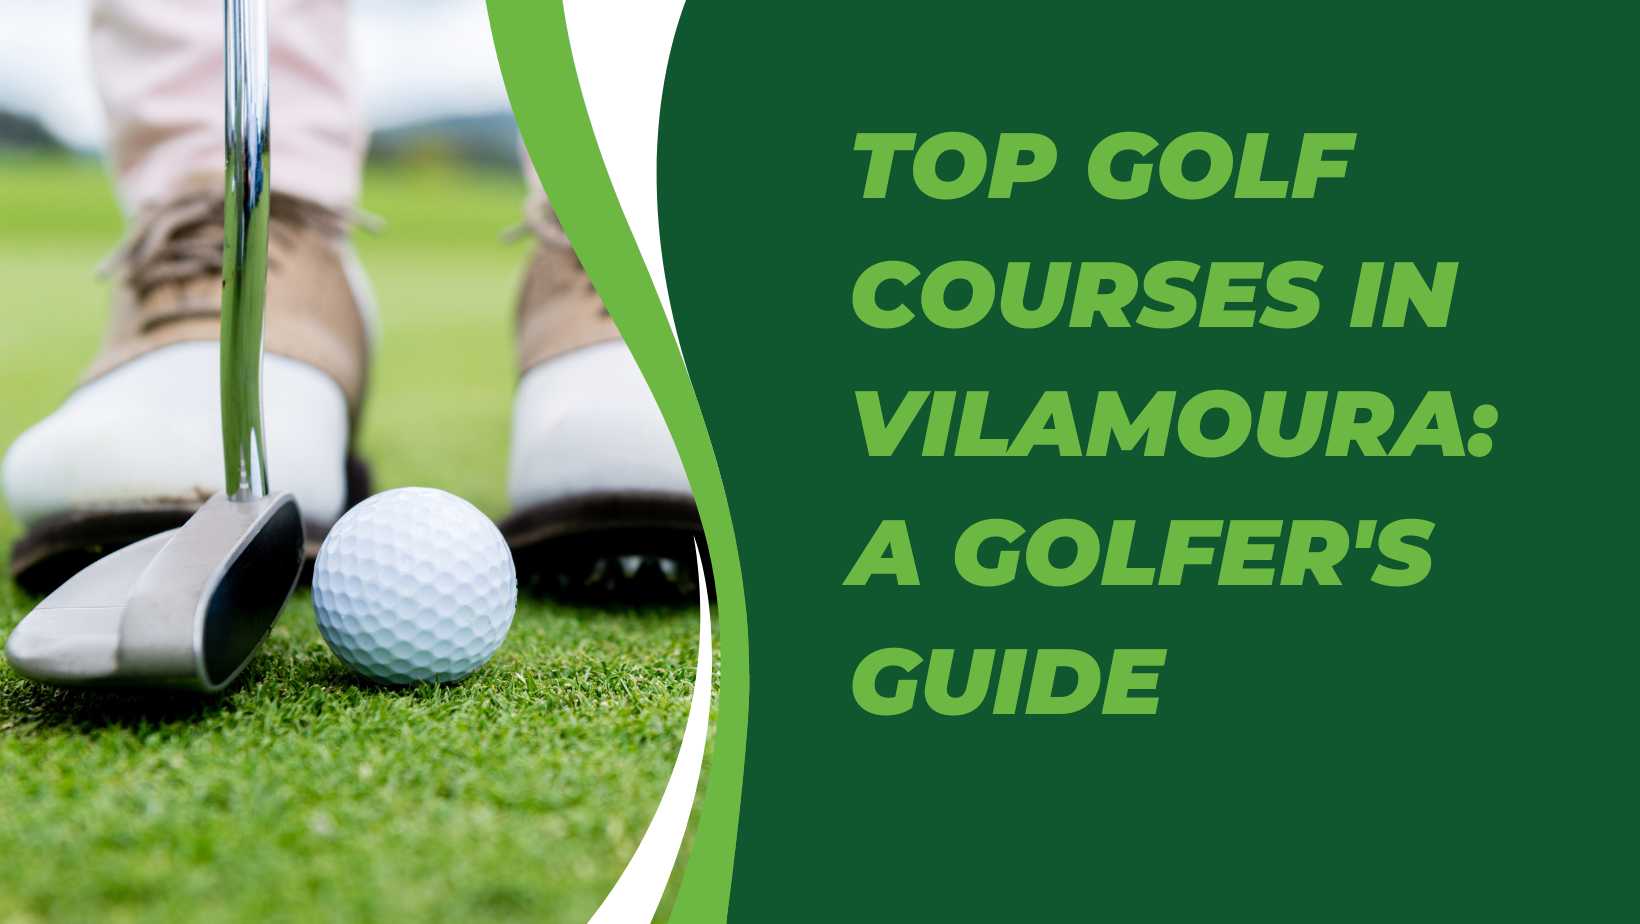 Vilamoura Golf Courses